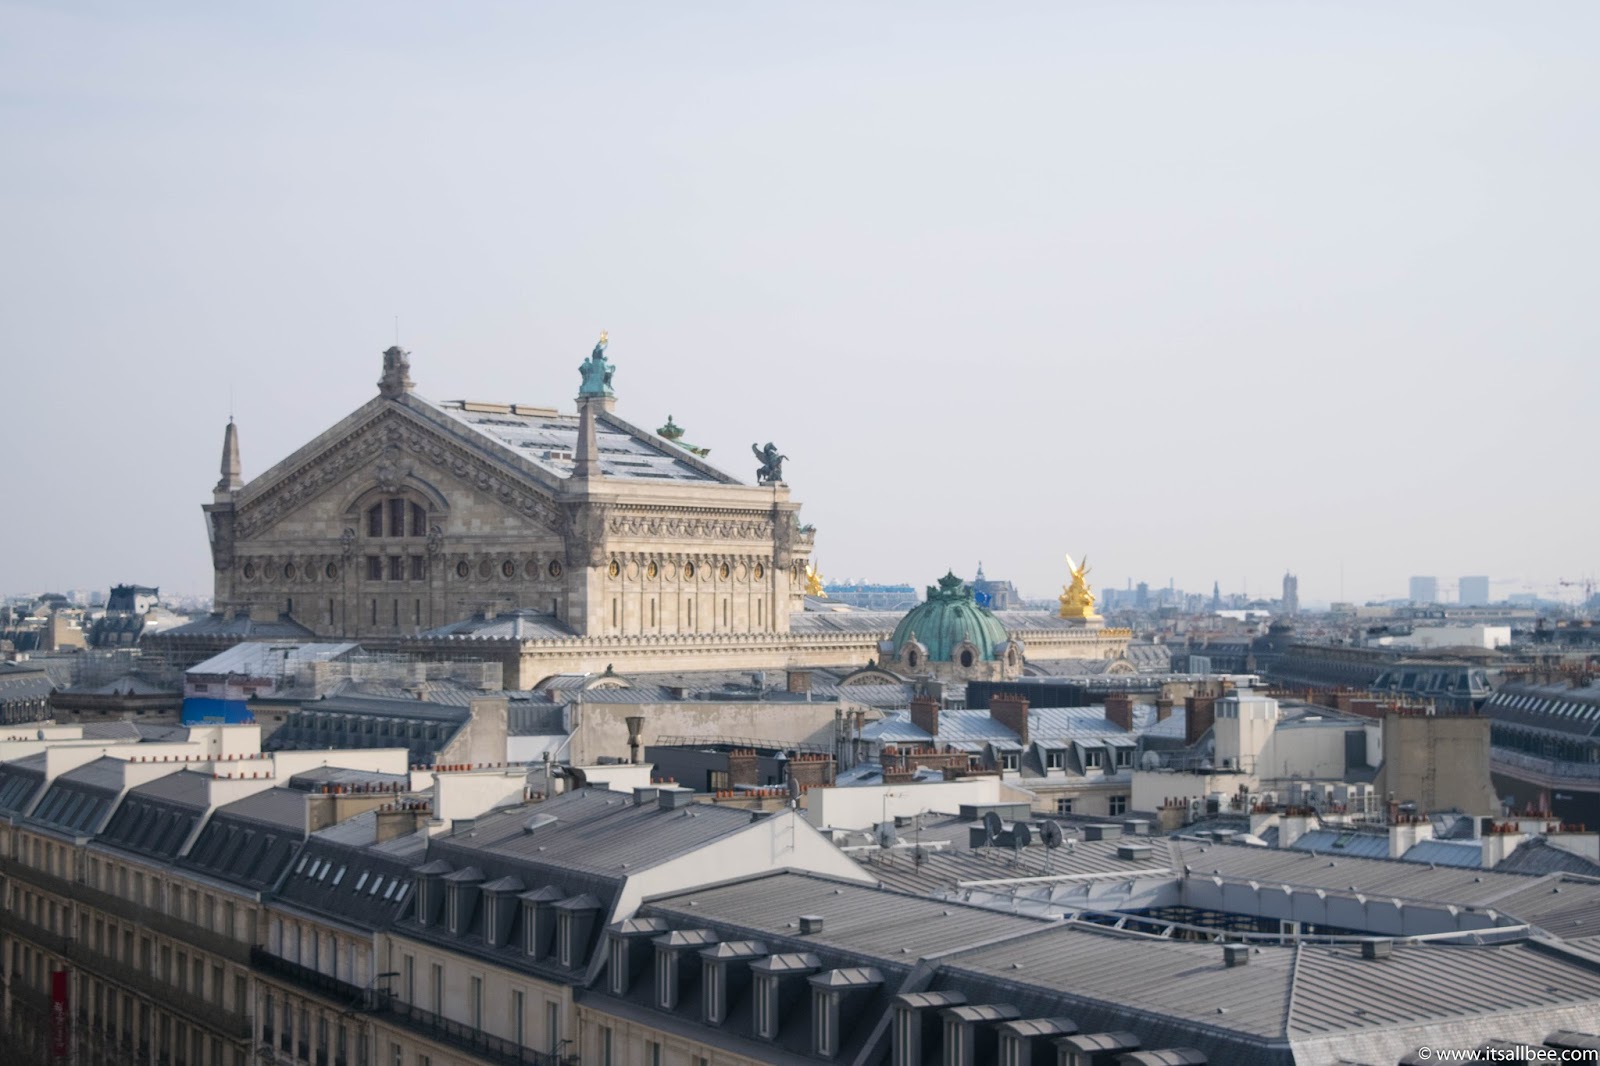 Cafe Deli-Cieux - Parisian Brunch with Panoramic Views of Paris - Printemps Rooftop Terrace